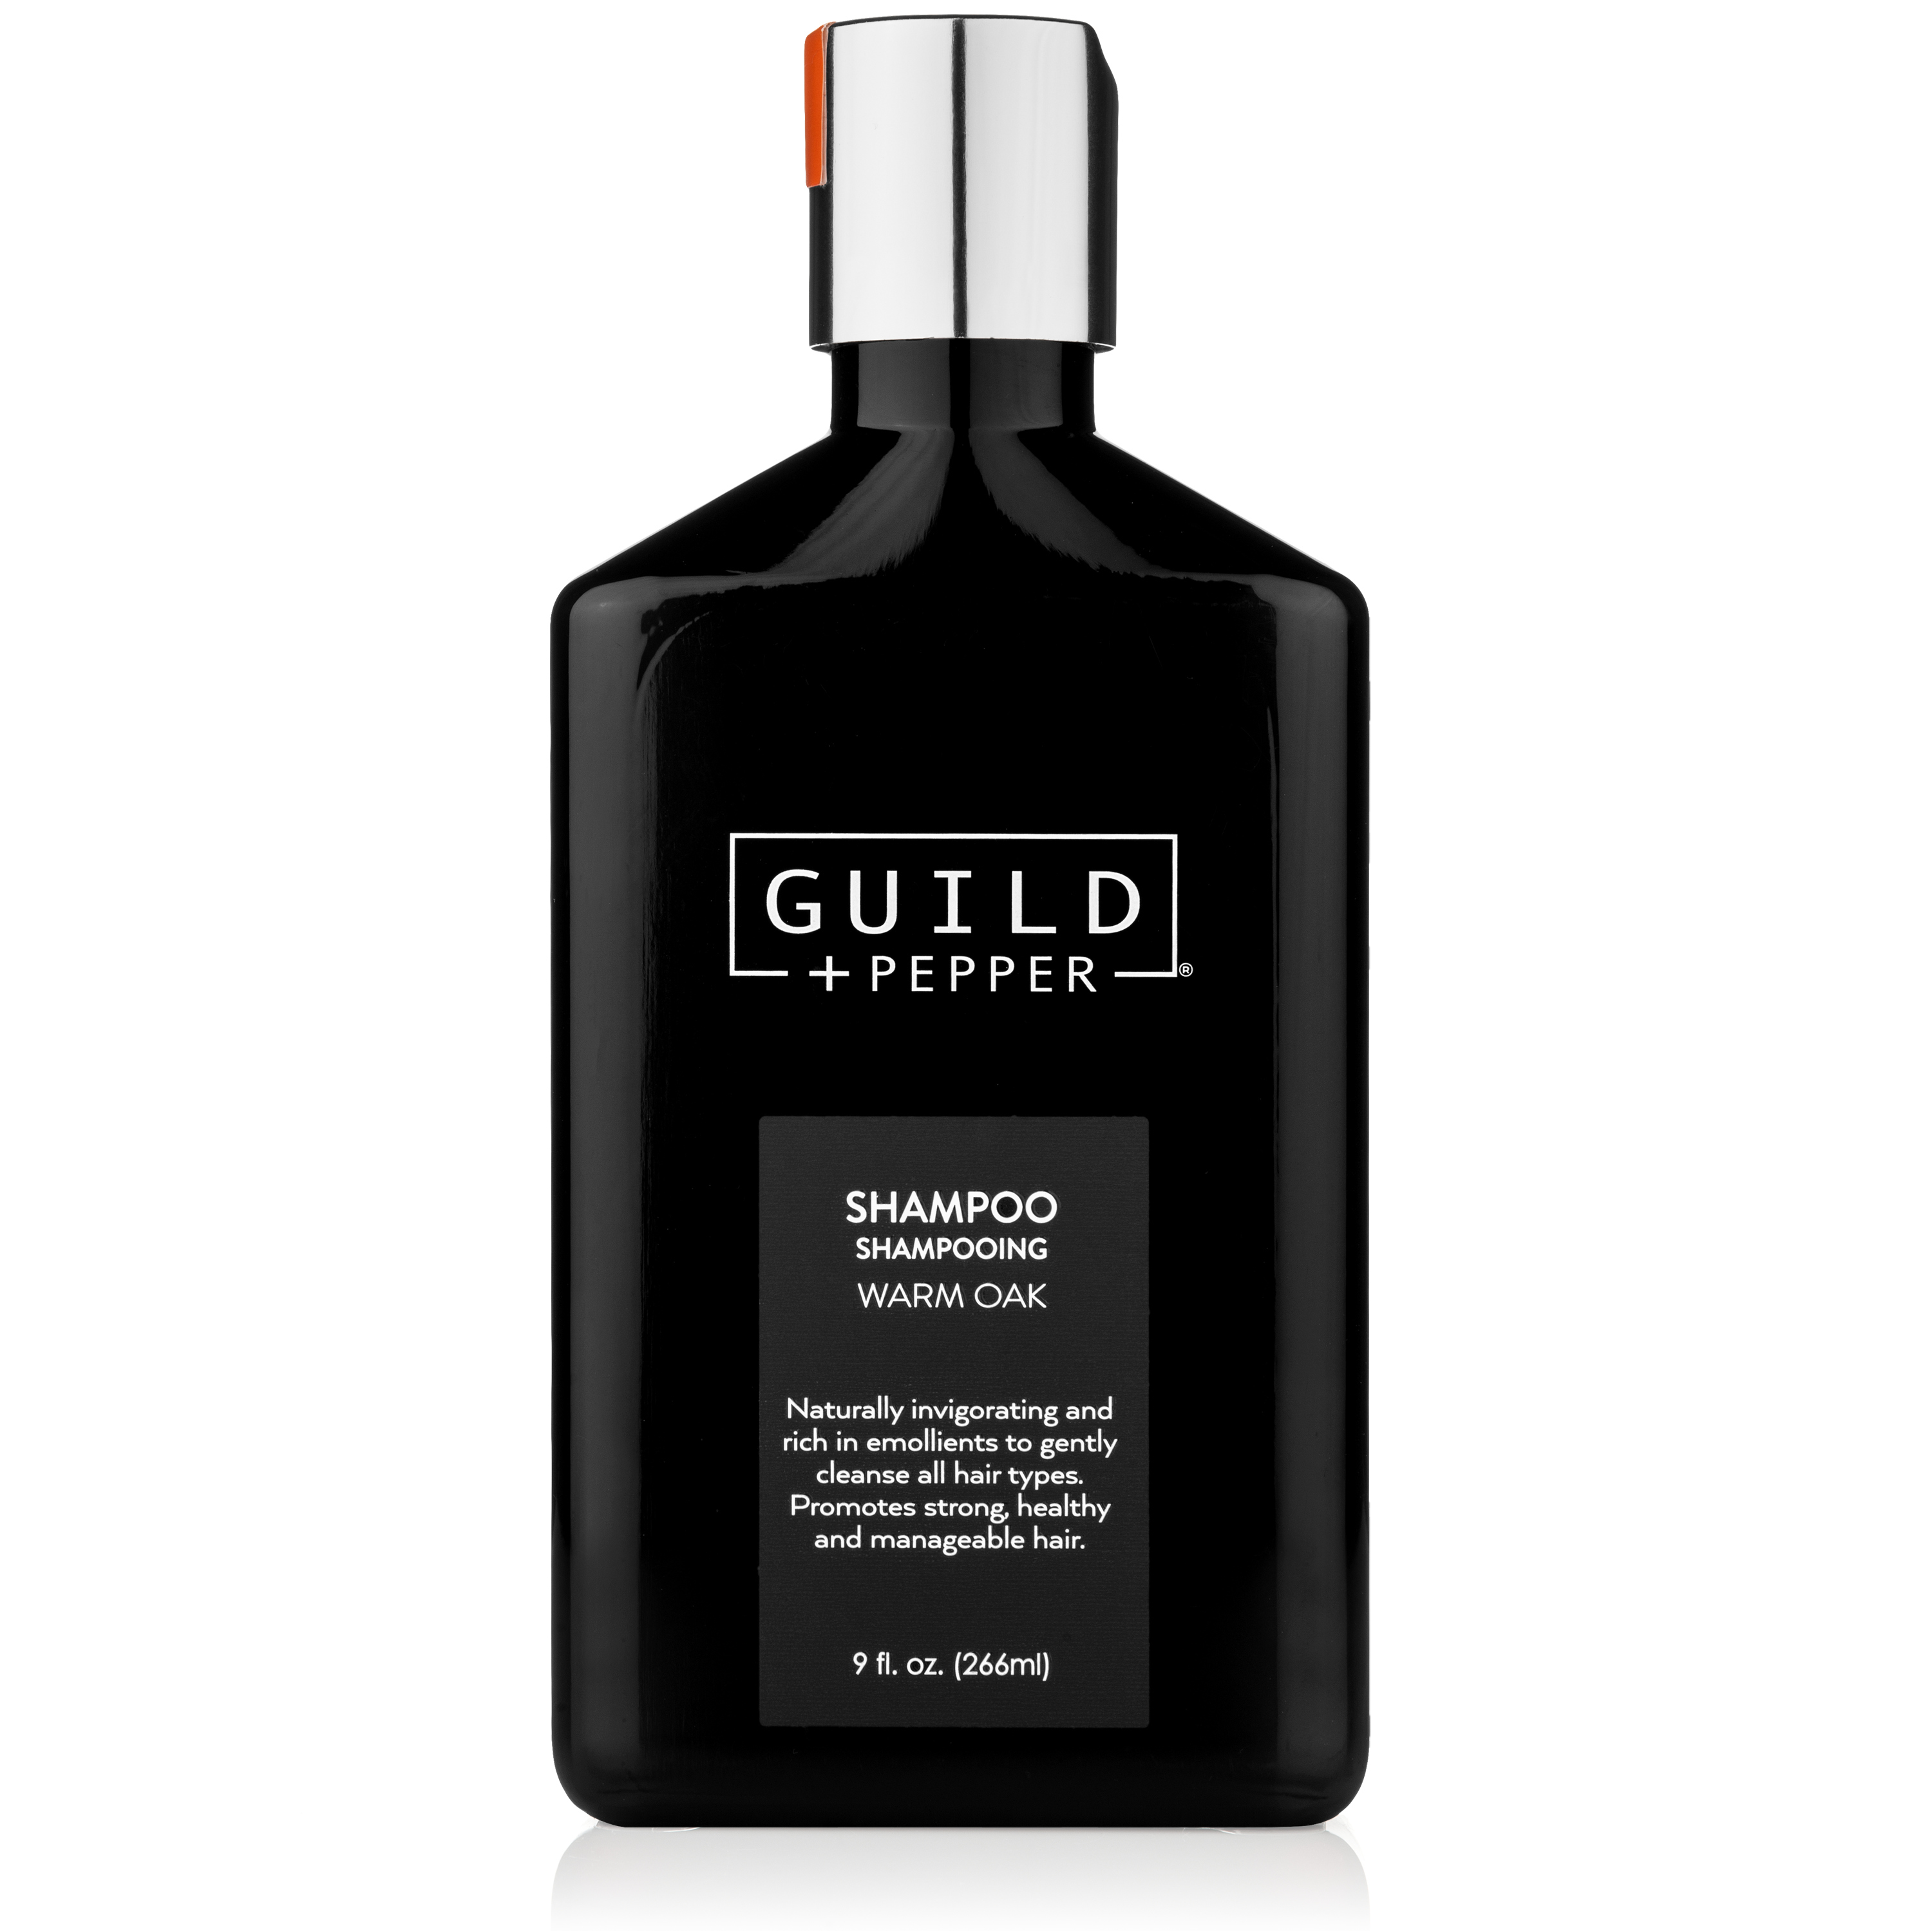 Guild+Pepper Shampoo | Gilchrist & Soames